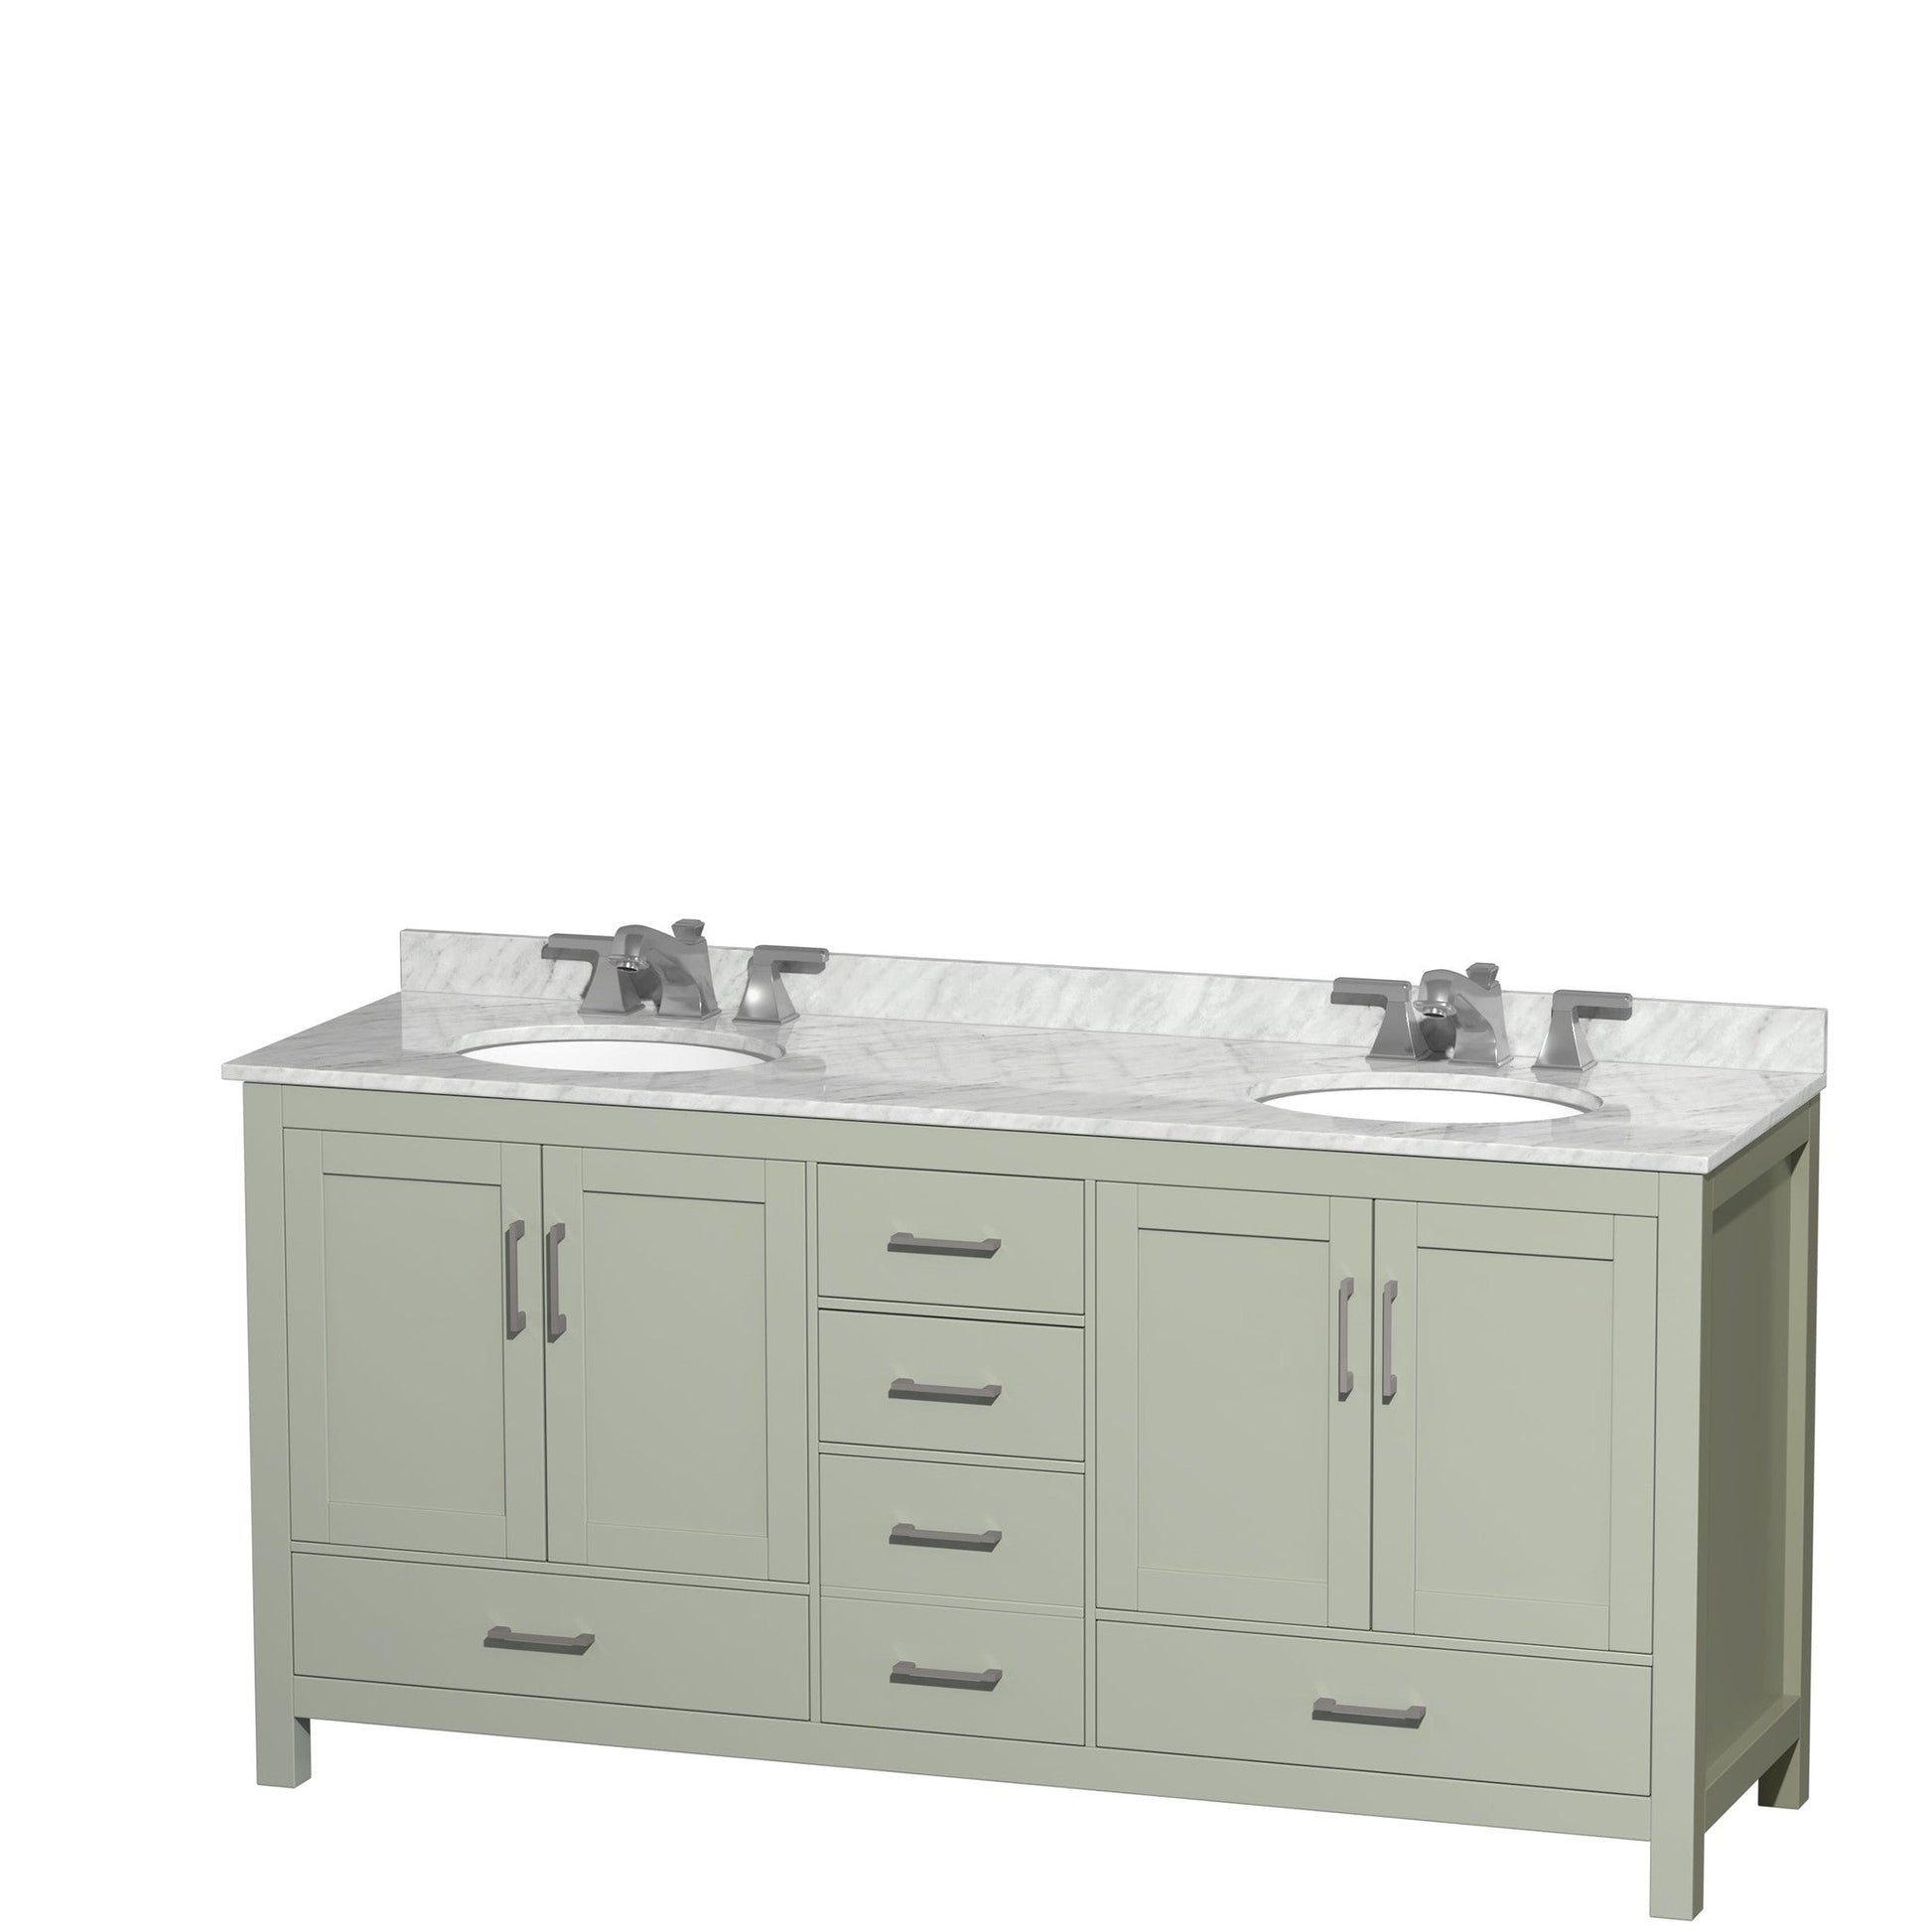 Sheffield 72" Double Bathroom Vanity in Light Green, White Carrara Marble Countertop, Undermount Oval Sinks, Brushed Nickel Trim